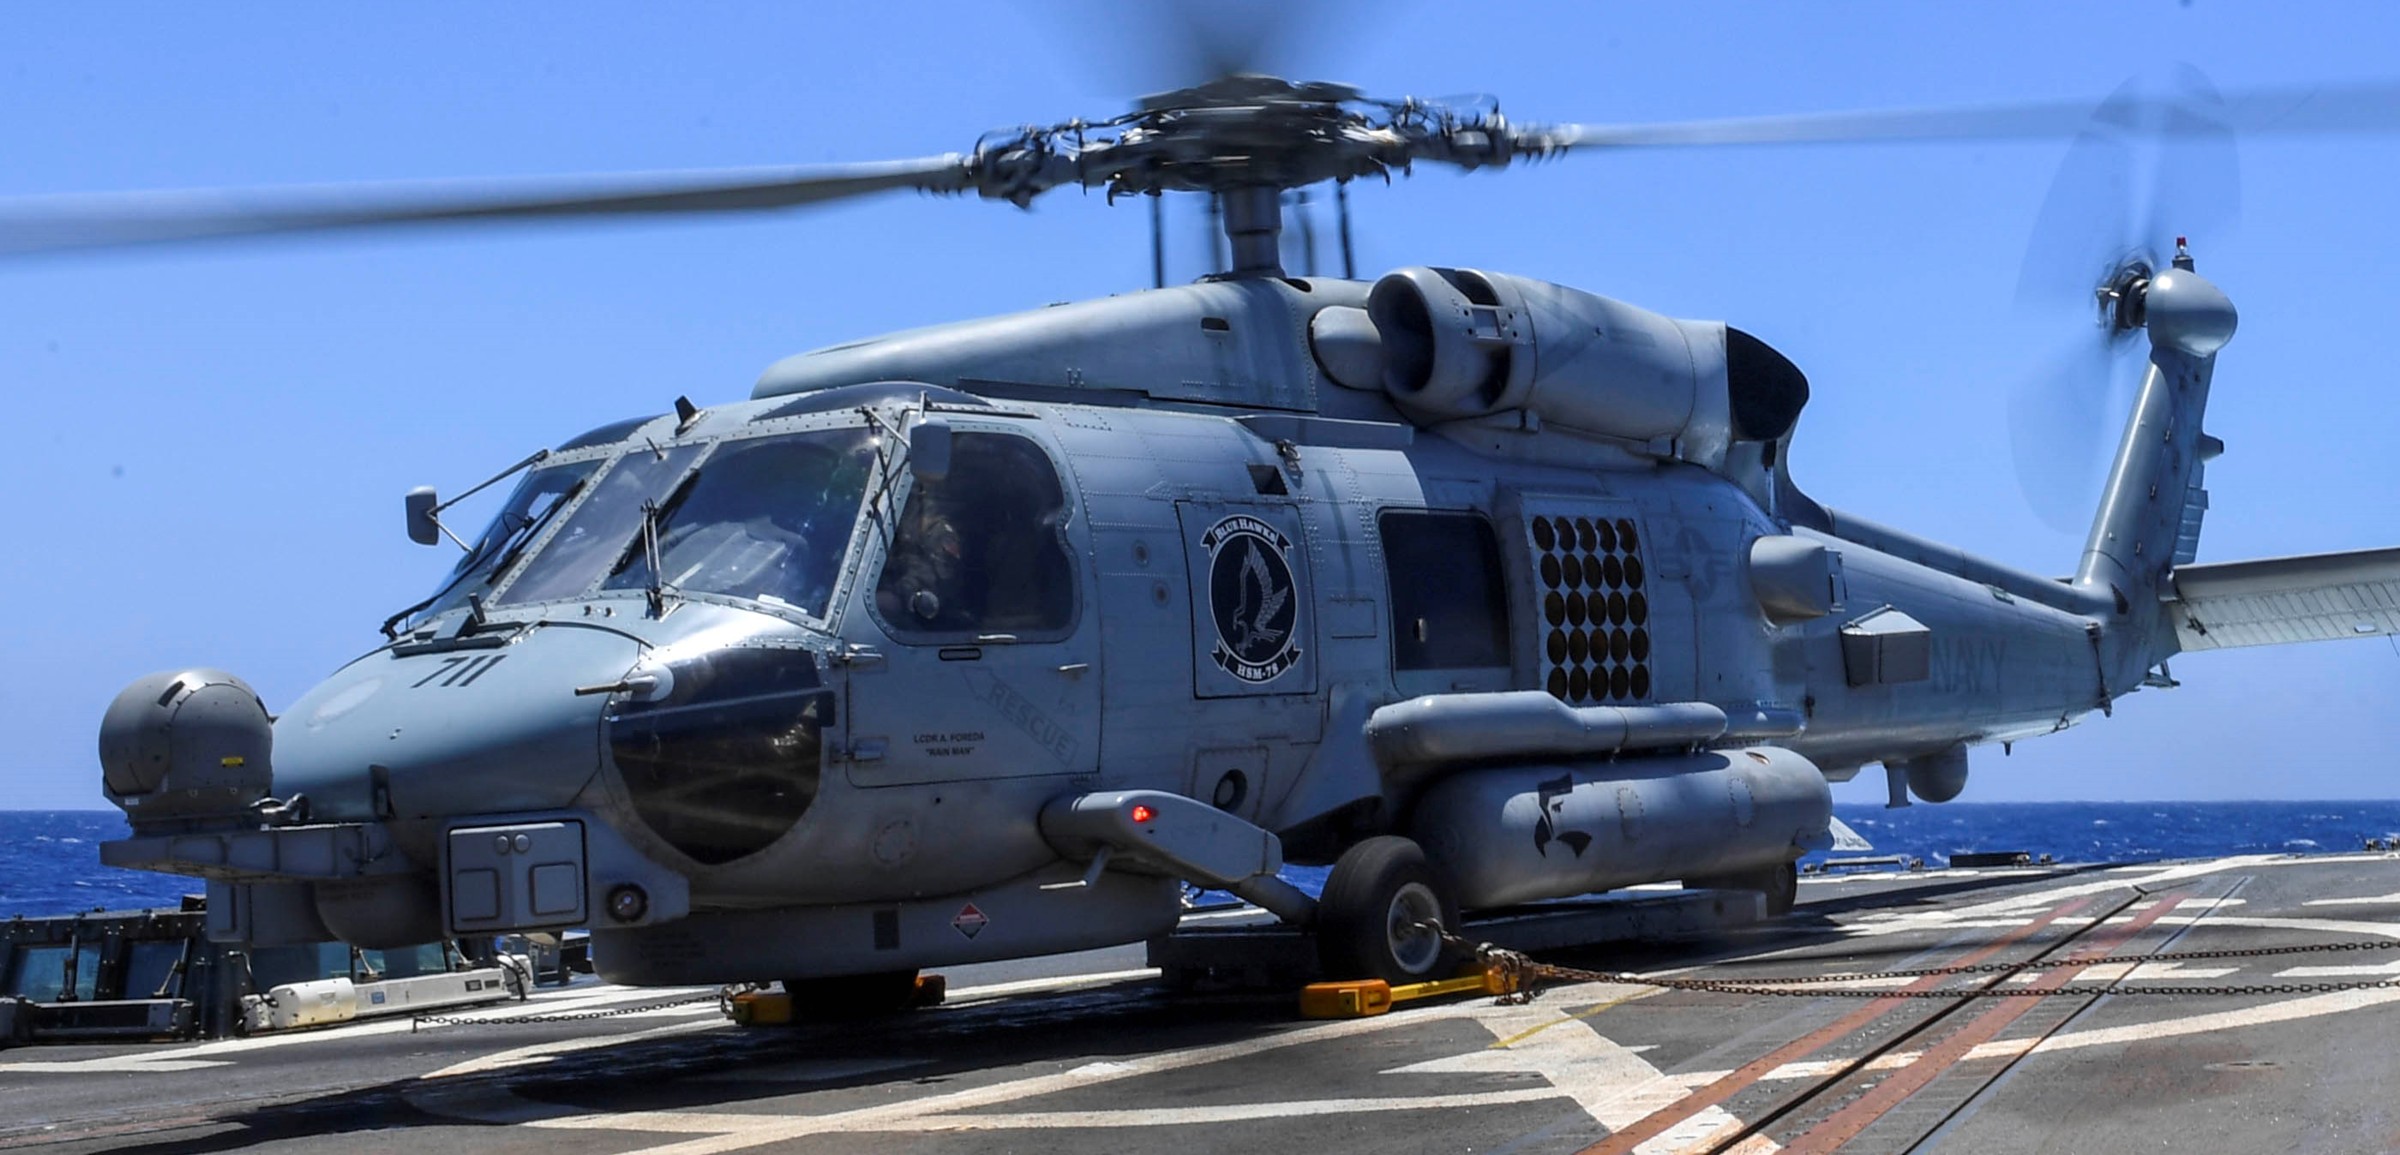 hsm-78 blue hawks helicopter maritime strike squadron mh-60r seahawk us navy 2017 02 uss wayne e. meyer ddg-108